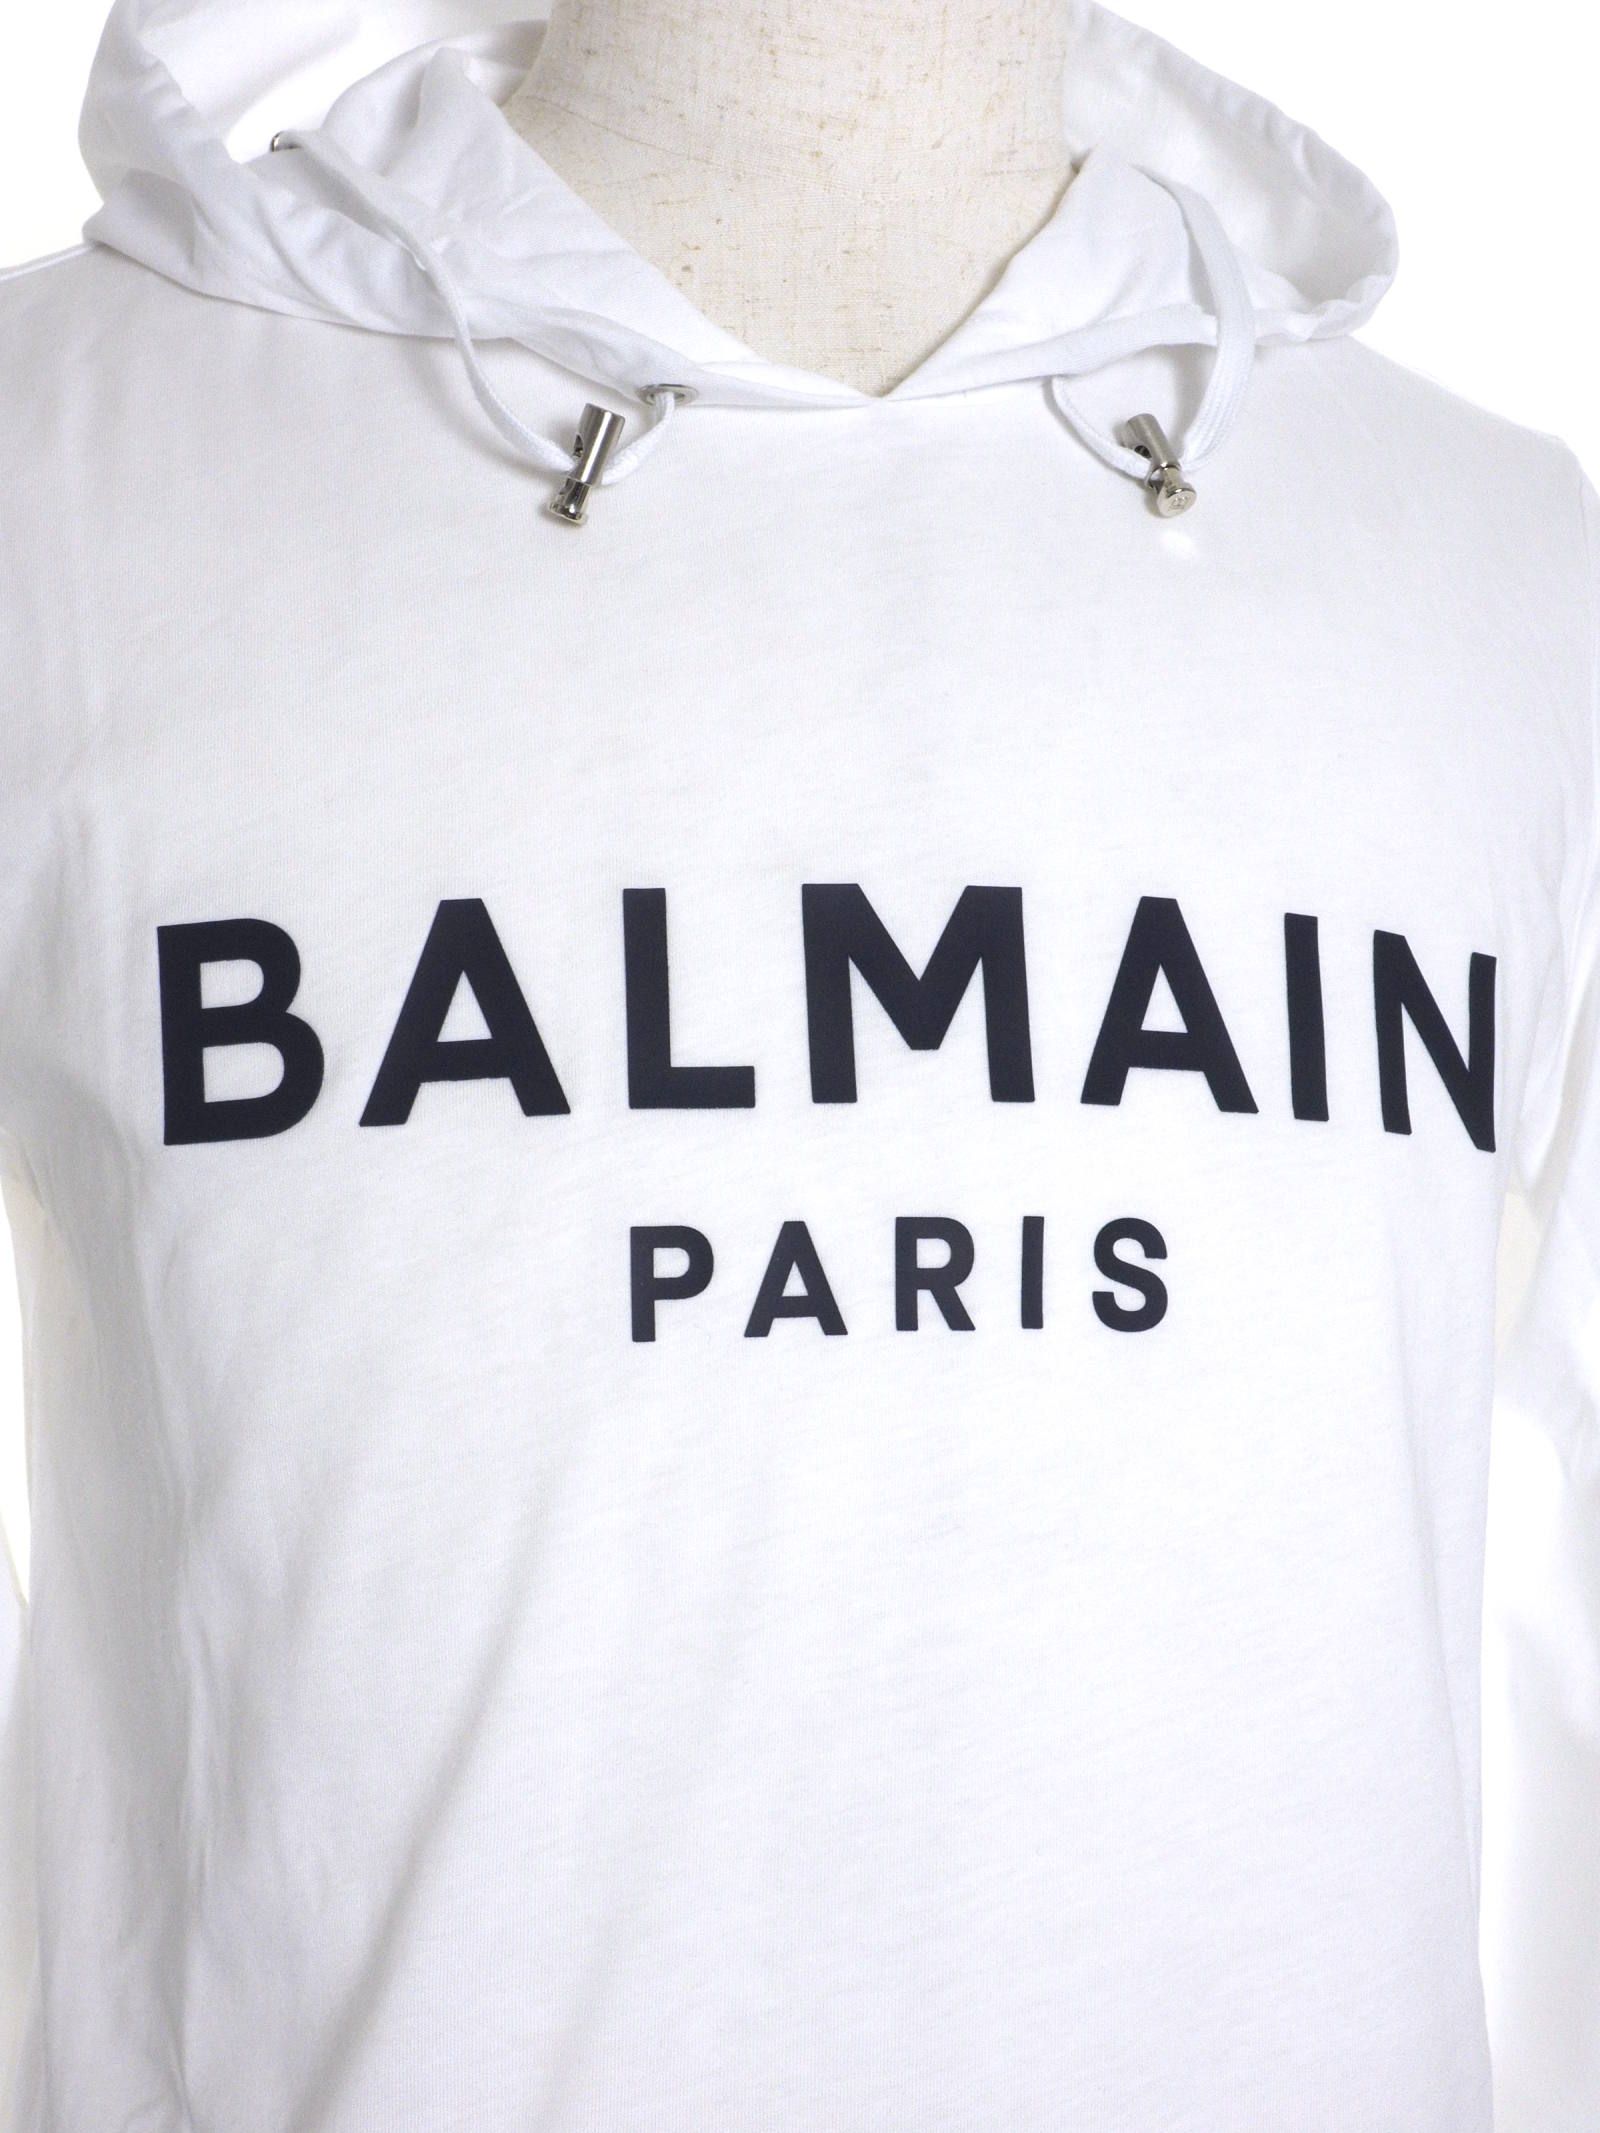 BALMAIN - フード付長袖Tシャツ - WHITE | STORY